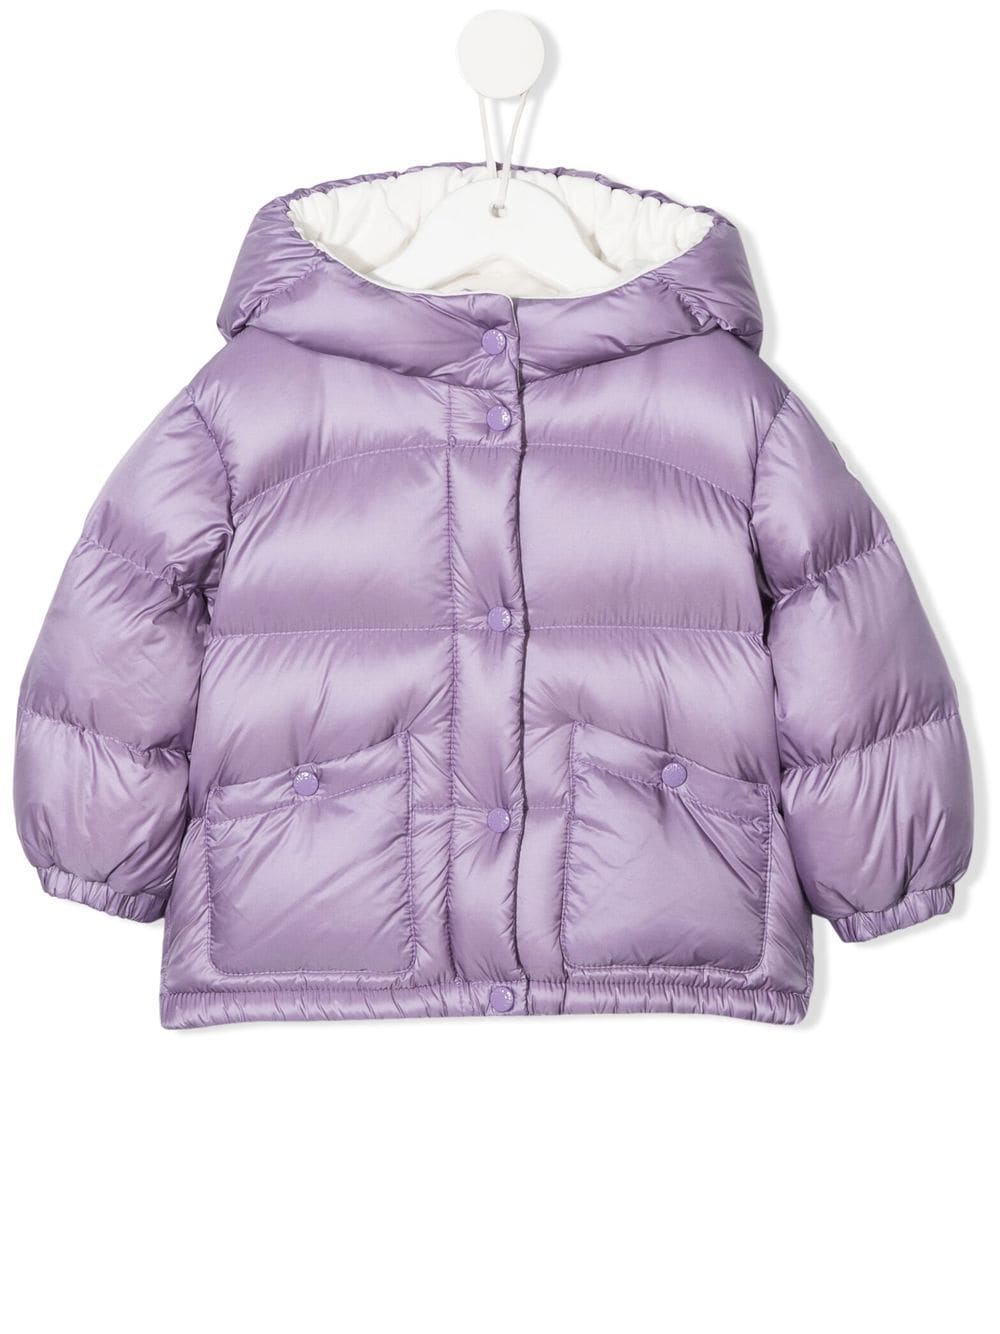 Lila jacket for newborn girls